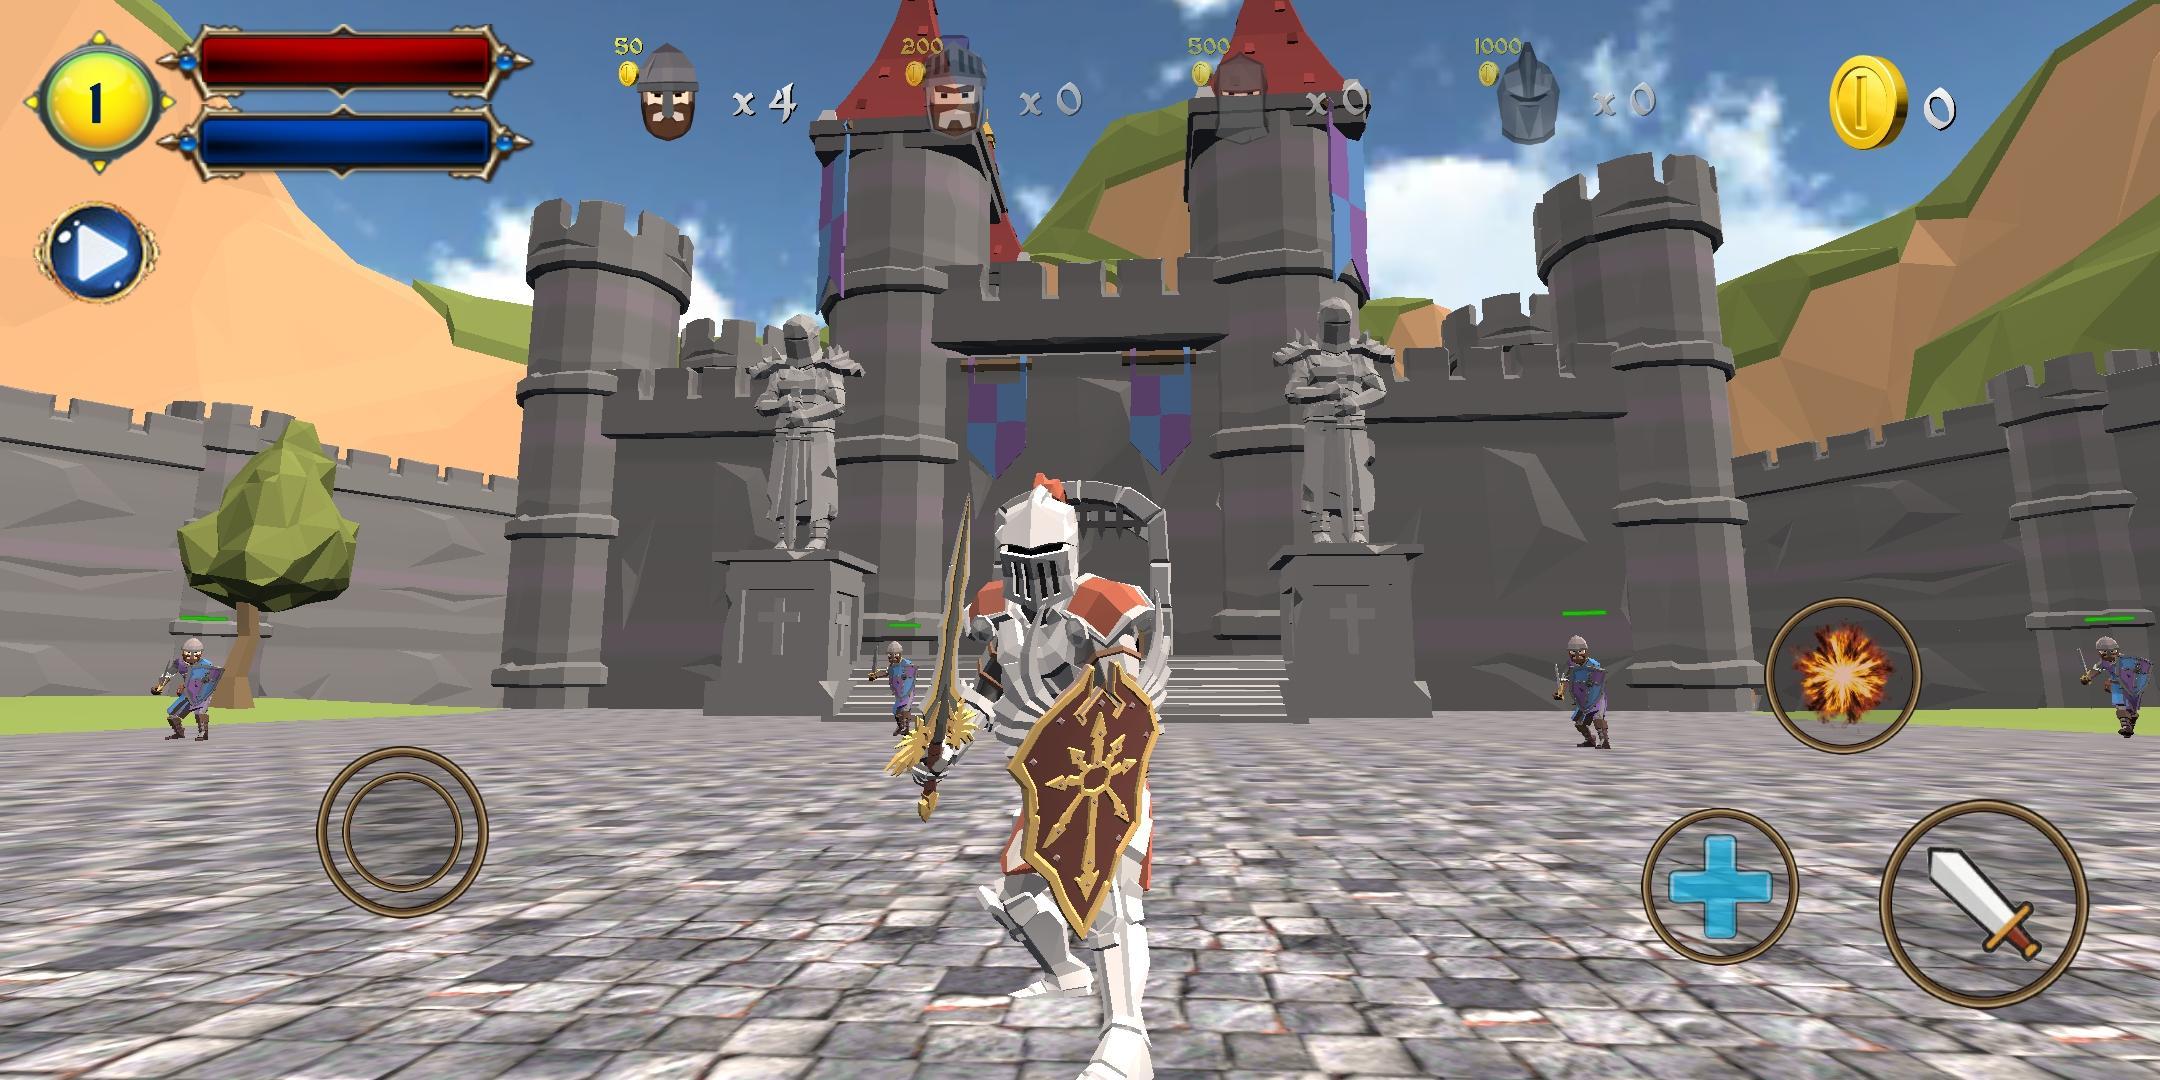 Screenshot 1 of Битва рыцарей защиты замка 1.6